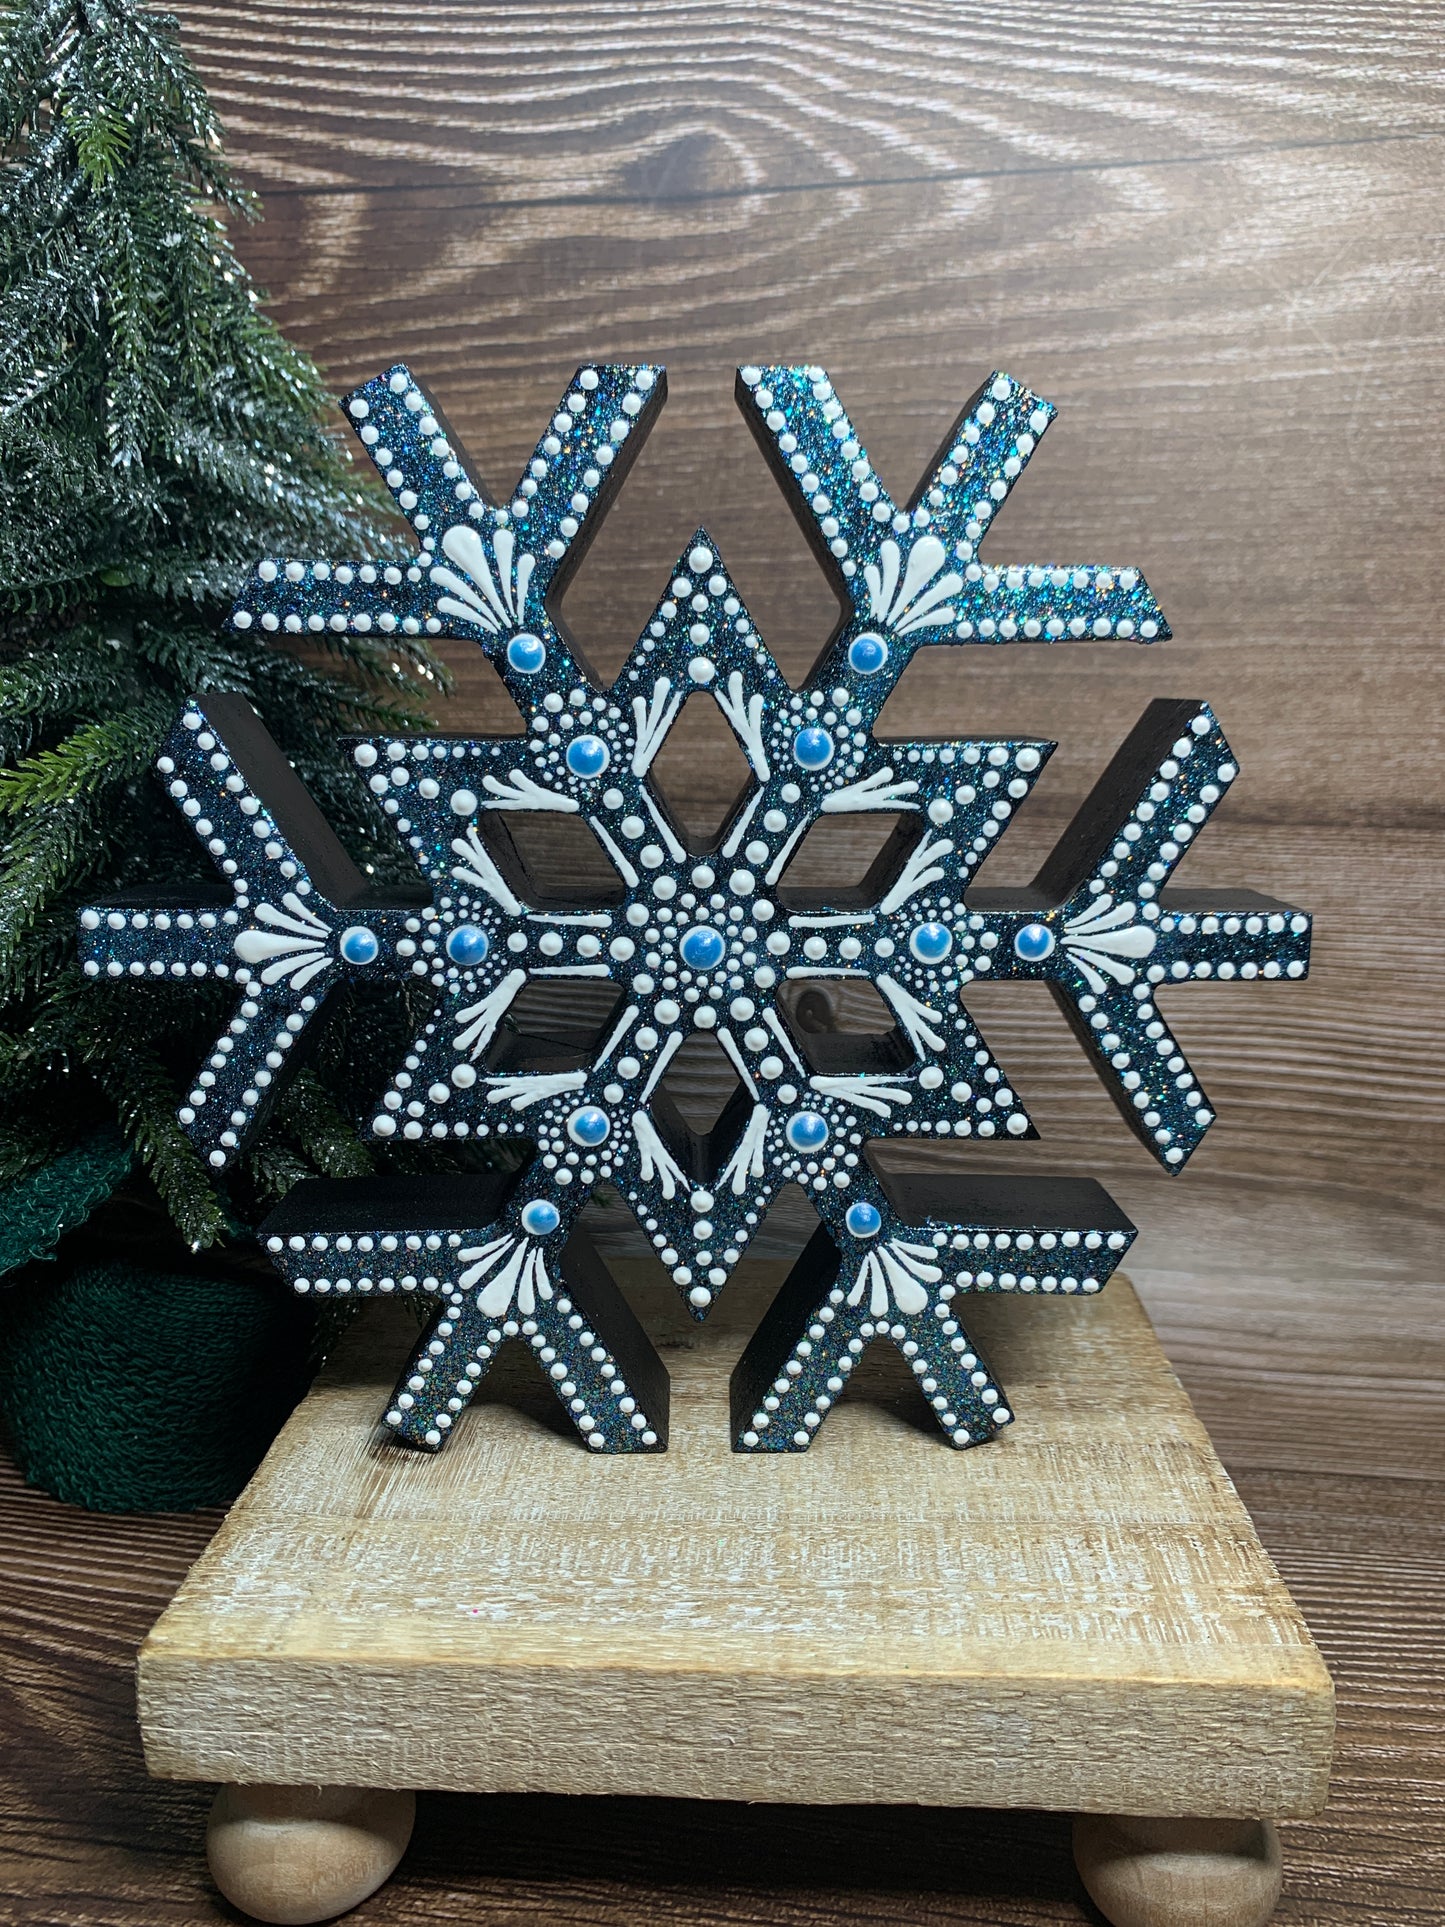 Large snowflake shelf sitters